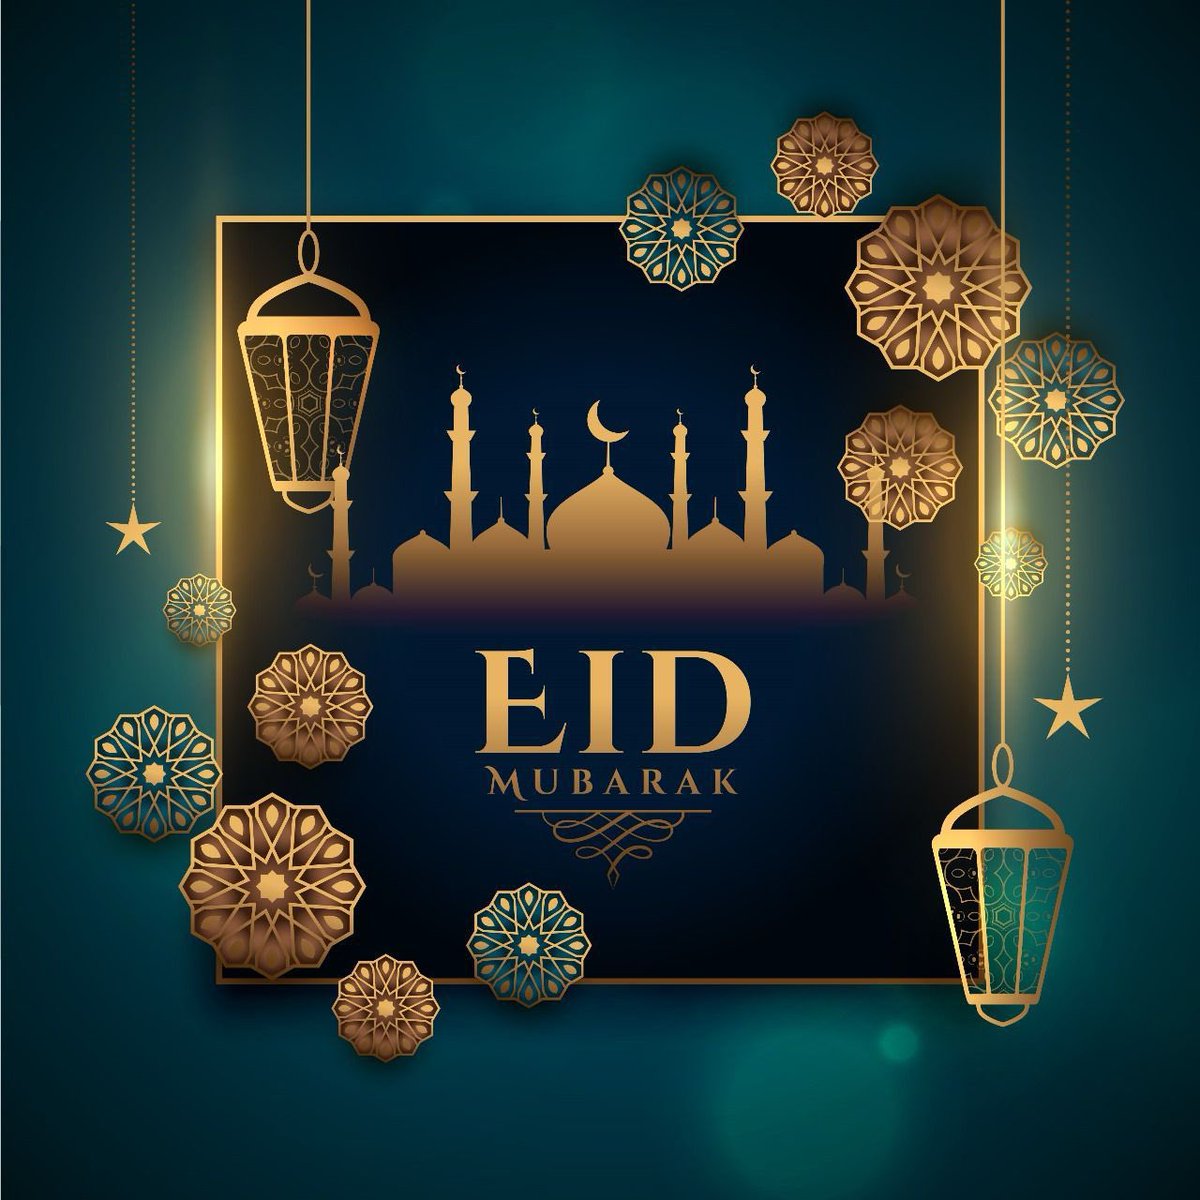 #Eid_Mubarak Happy Eid to all who celebrate! Much peace, love, & happiness ❤️Dear friends - @mirvatalasnag @rahatheart1 @minhaskh @MoeenSaleem @aayshacader @mbelshazly @Sarah_Moharem @skarim01 & more!